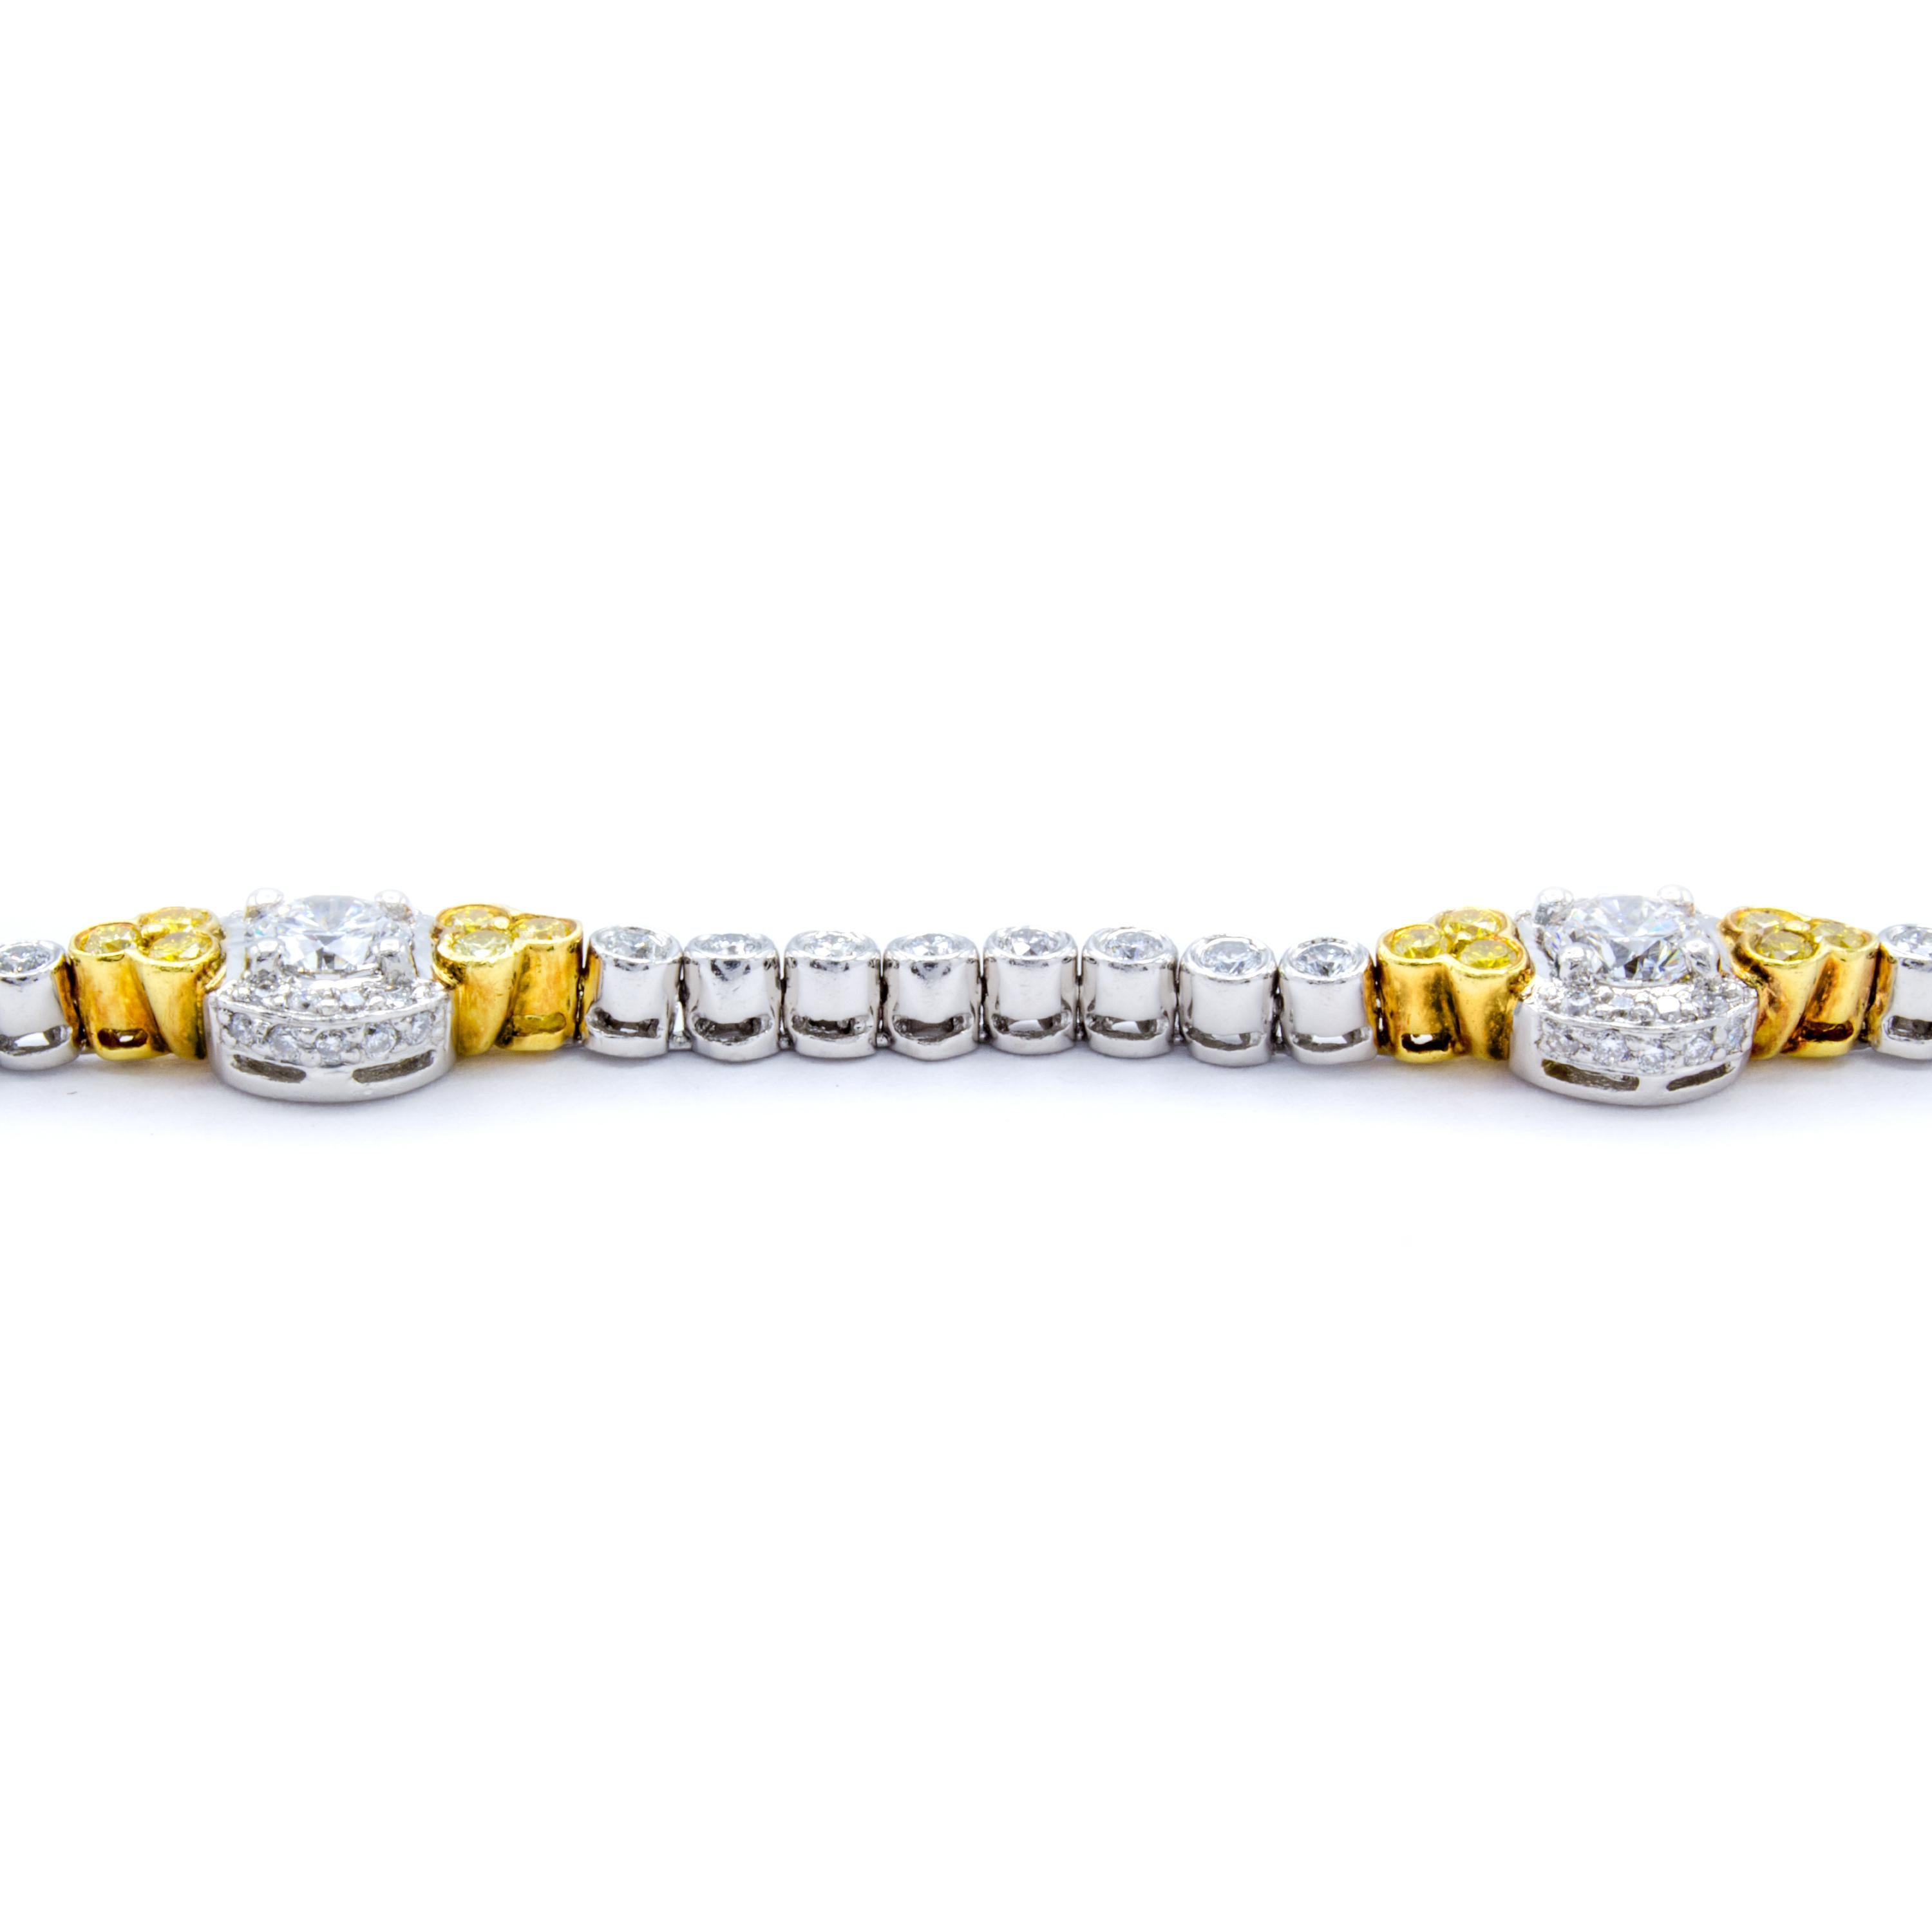 Women's David Rosenberg 3.50 Total Carats White and Fancy Round Diamond Bracelet